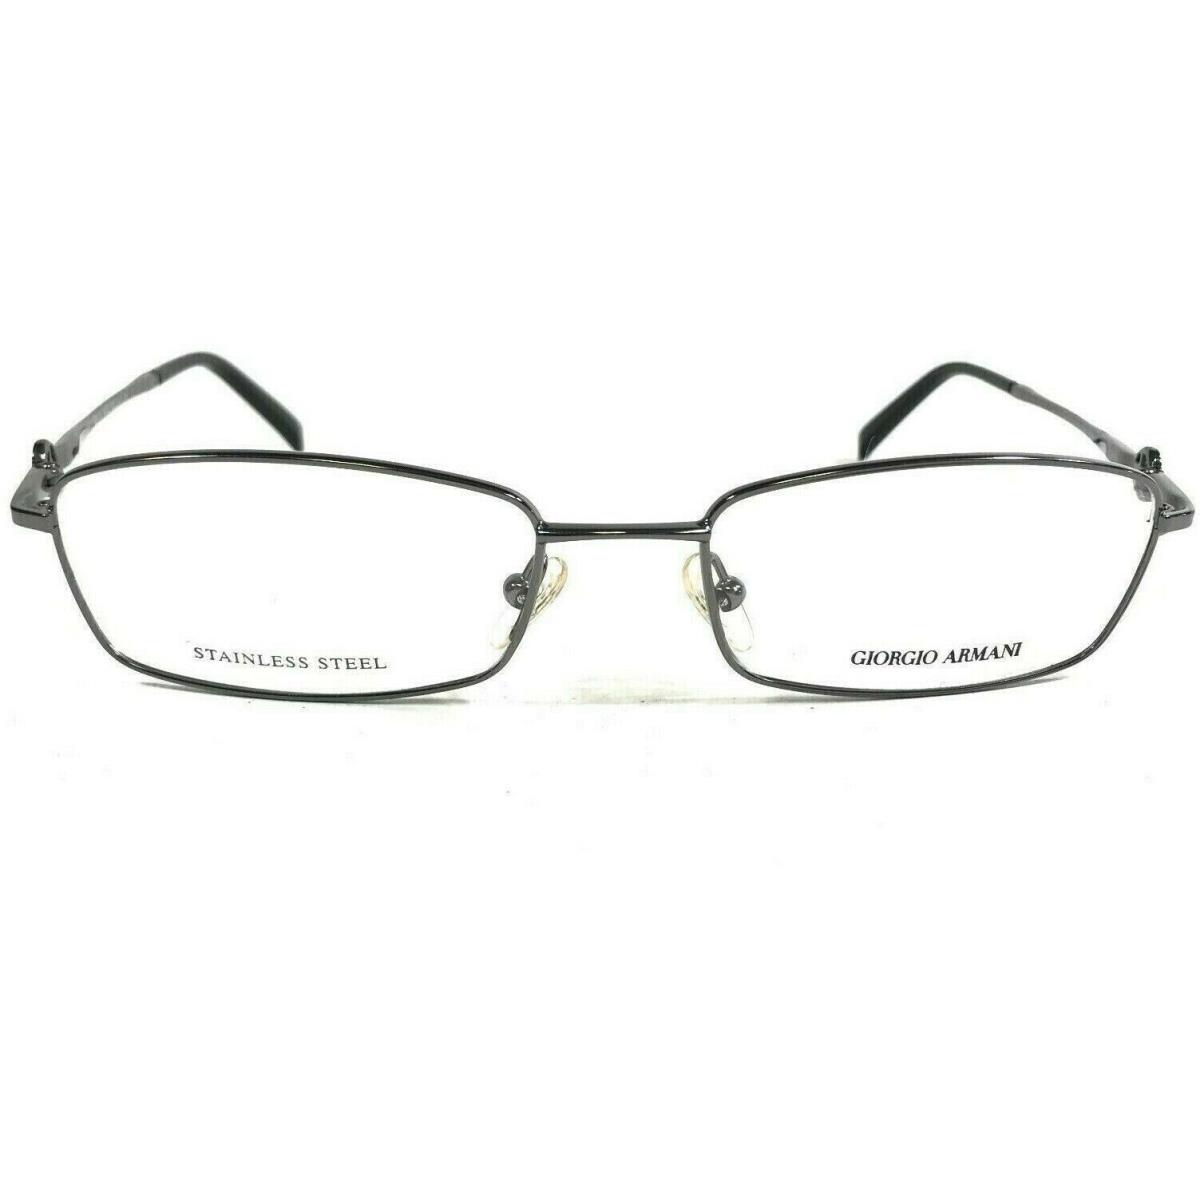 Giorgio Armani GA294 KJ1 Gunmetal Rectangular Metal Eyeglasses Frames 52-17-130